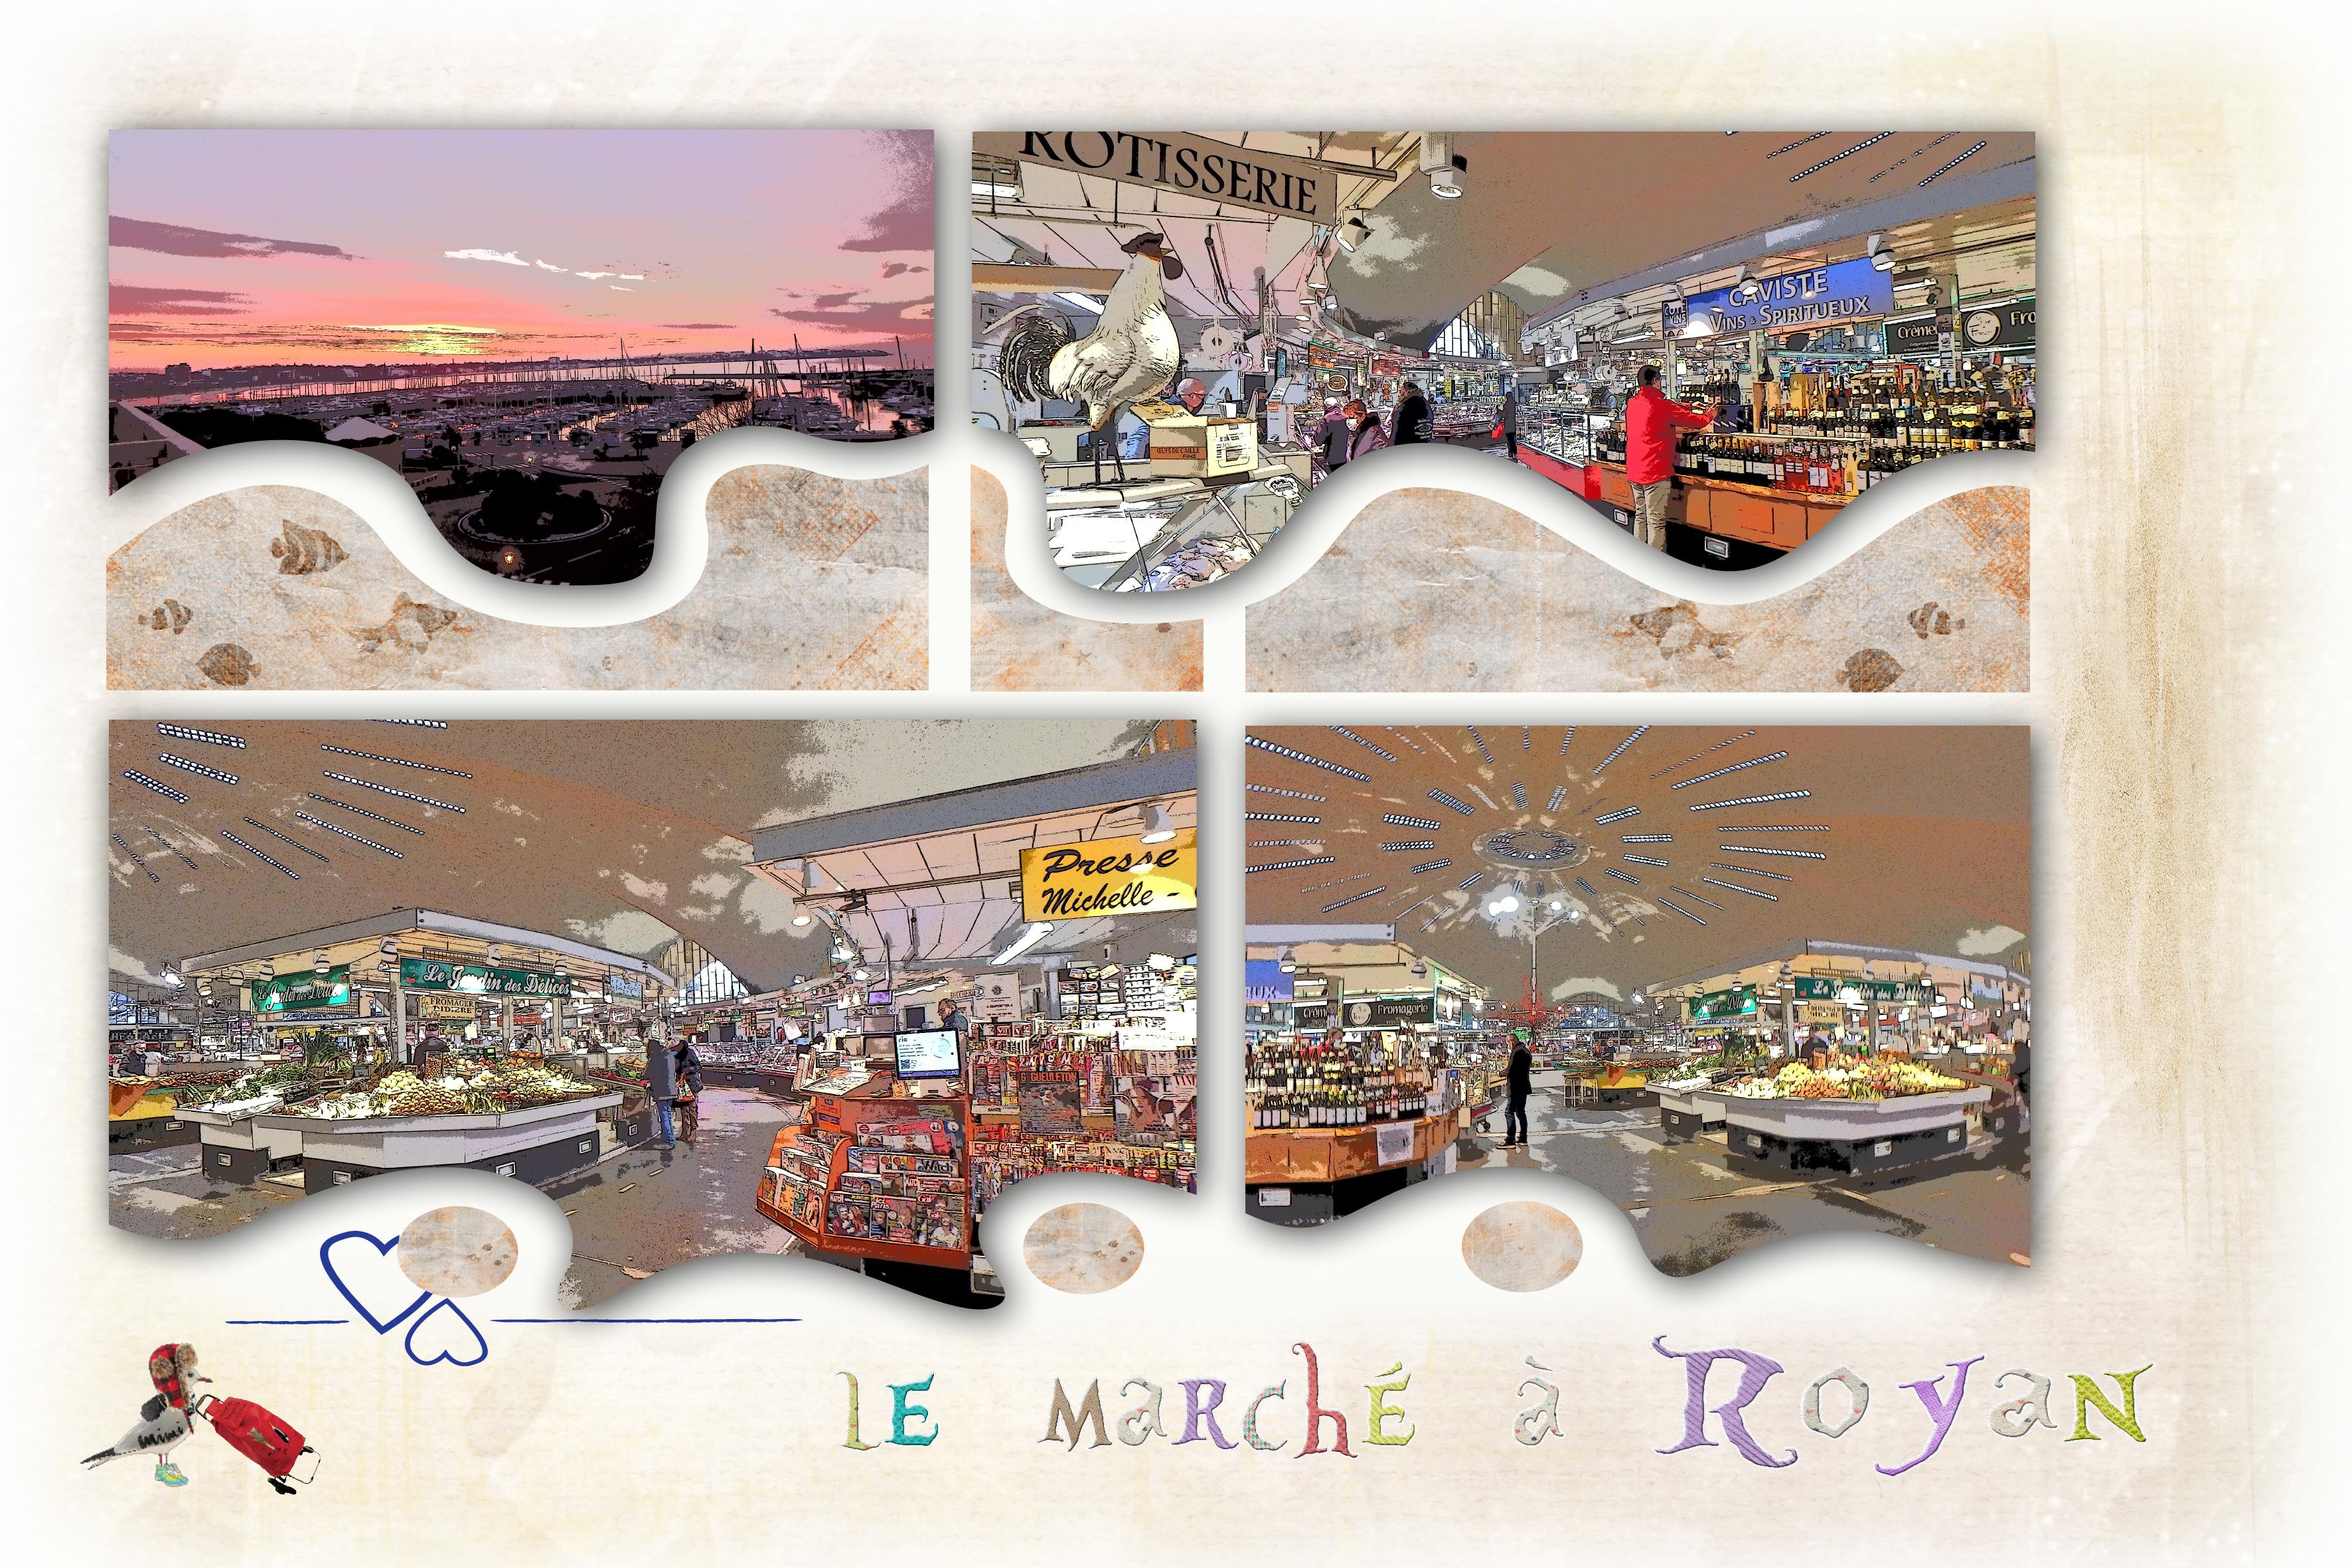 Royan-le marché matinal-13fév.jpg